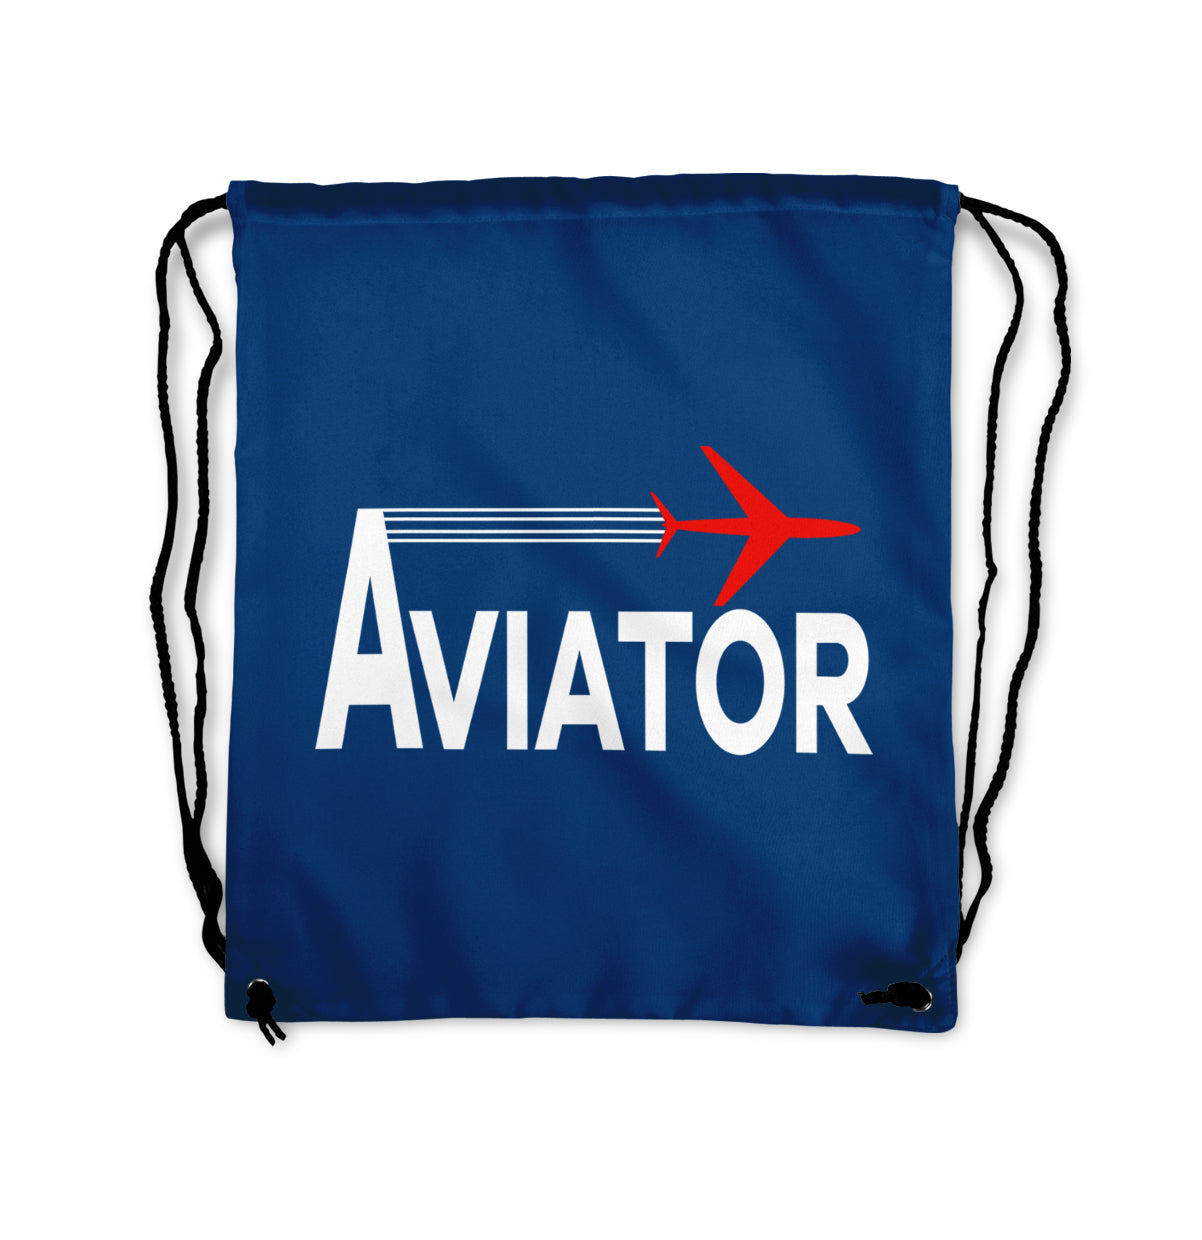 Aviator Designed Drawstring Bags